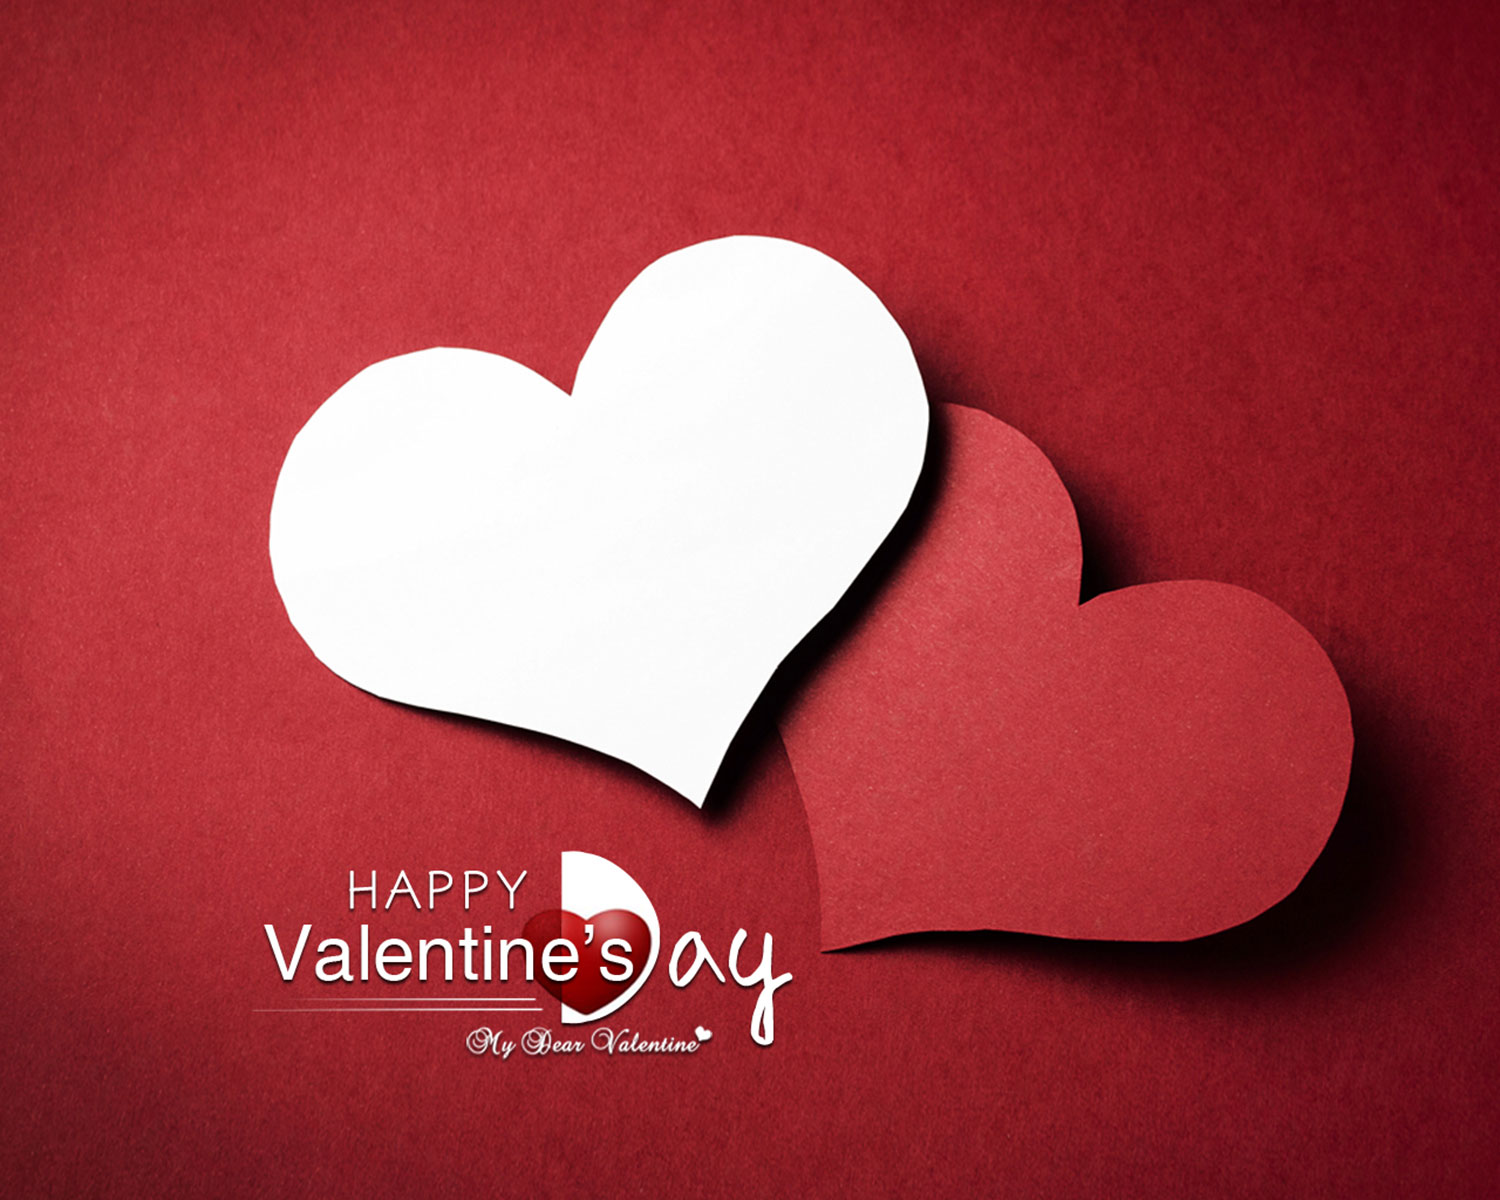 Happy Valentines Day Image Wallpaper